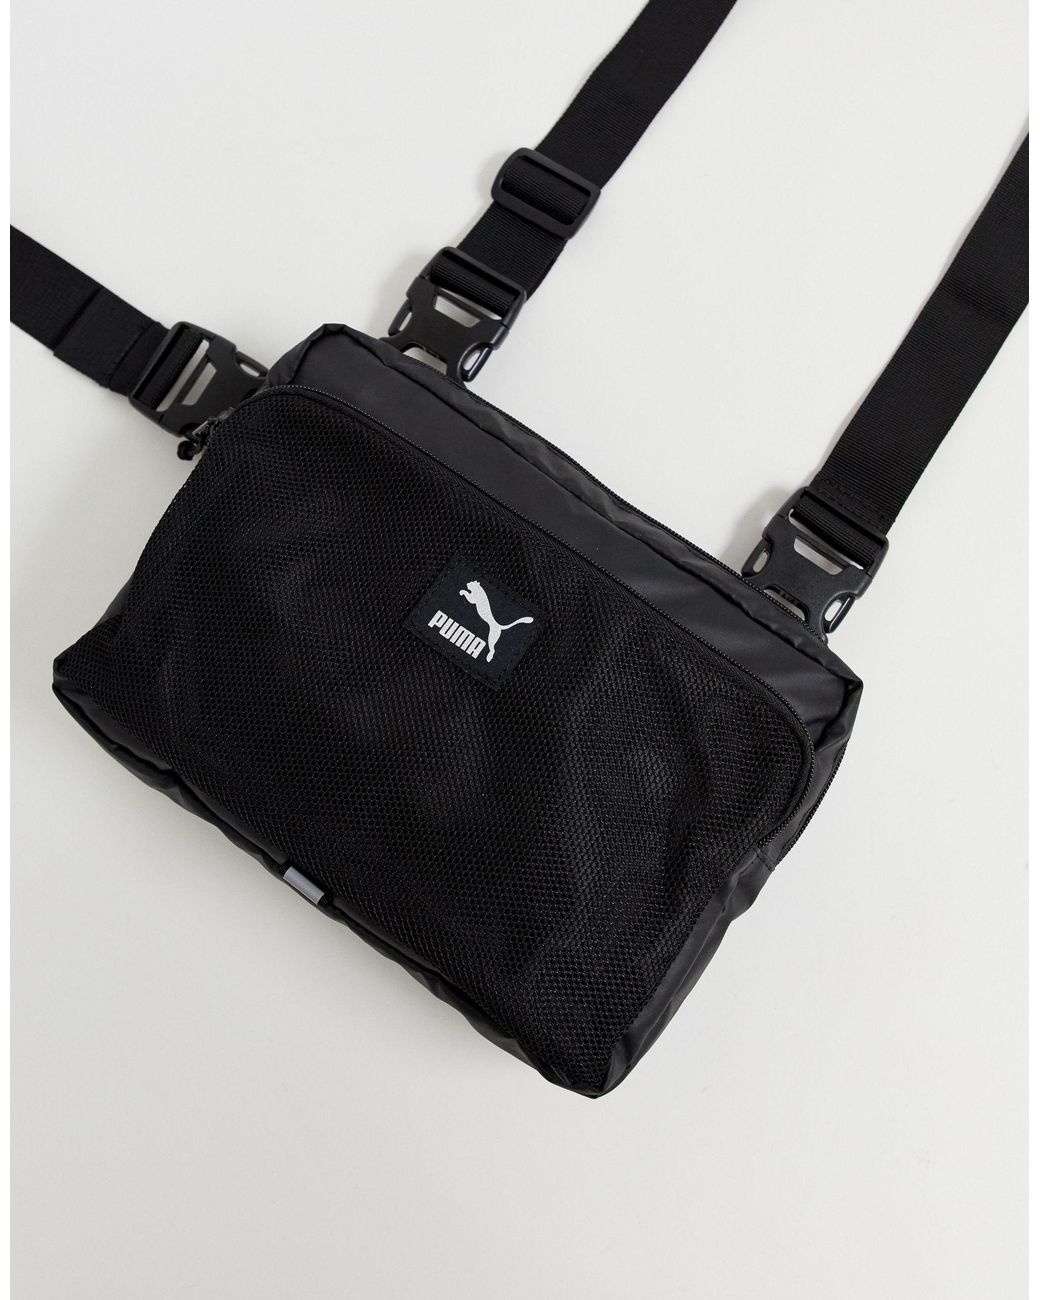 Shop Puma Chest Bag online | Lazada.com.my